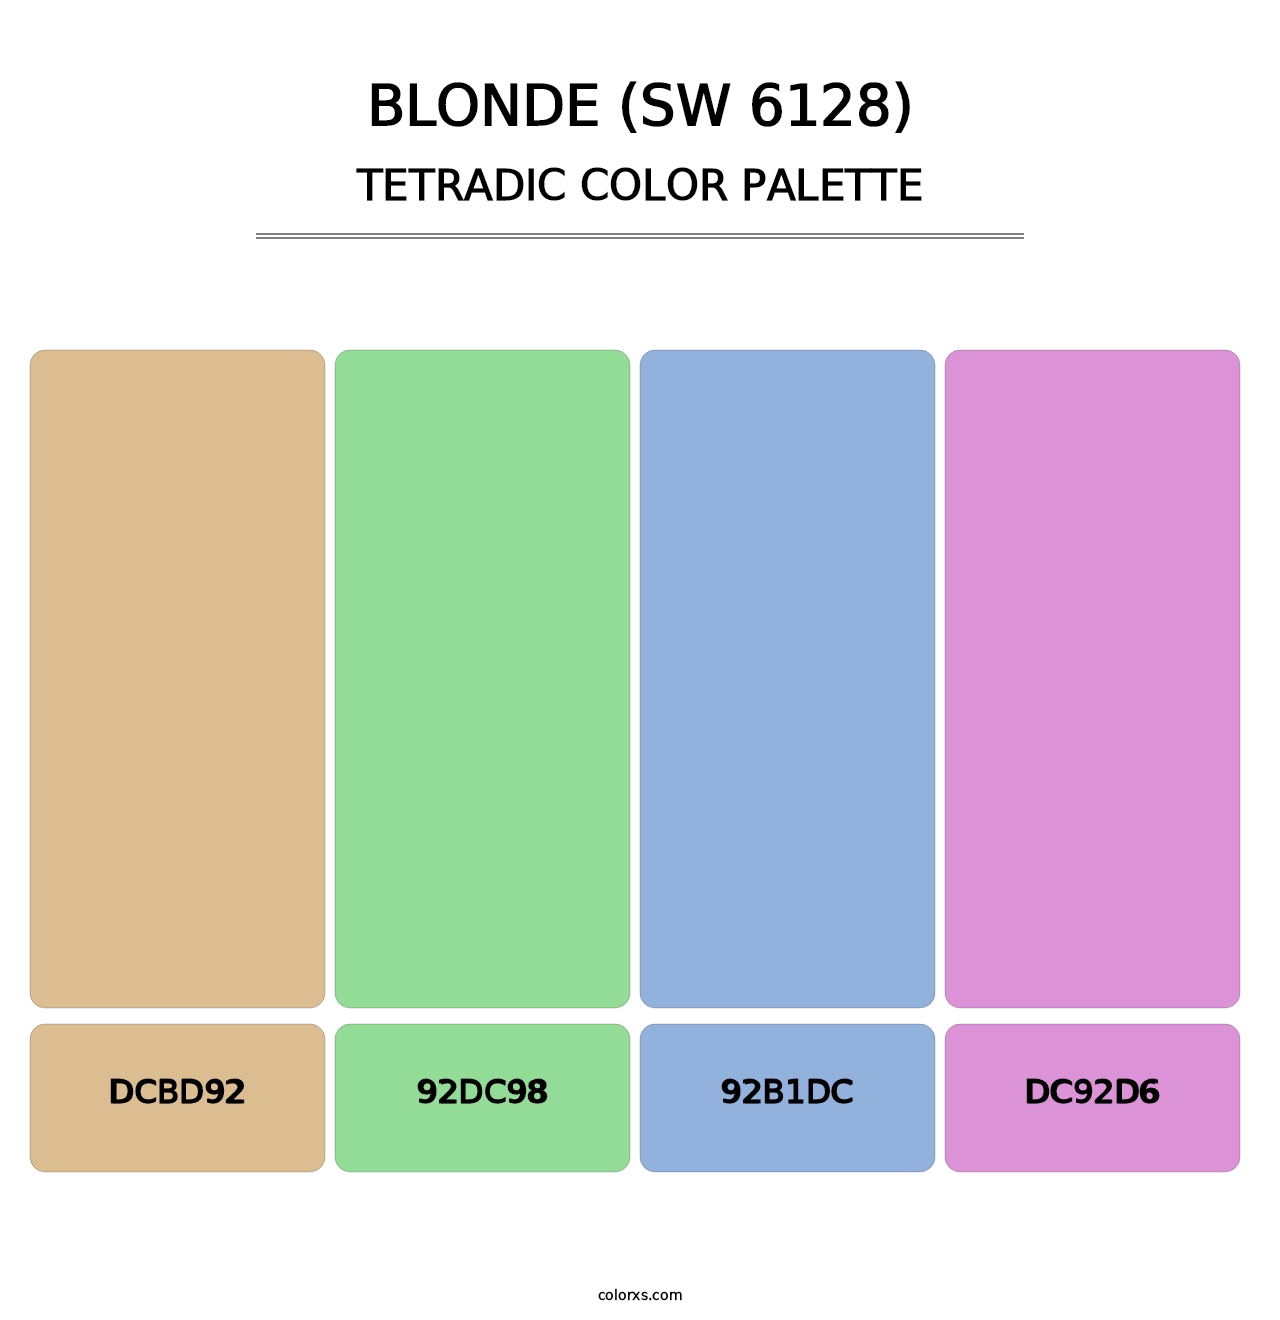 Blonde (SW 6128) - Tetradic Color Palette